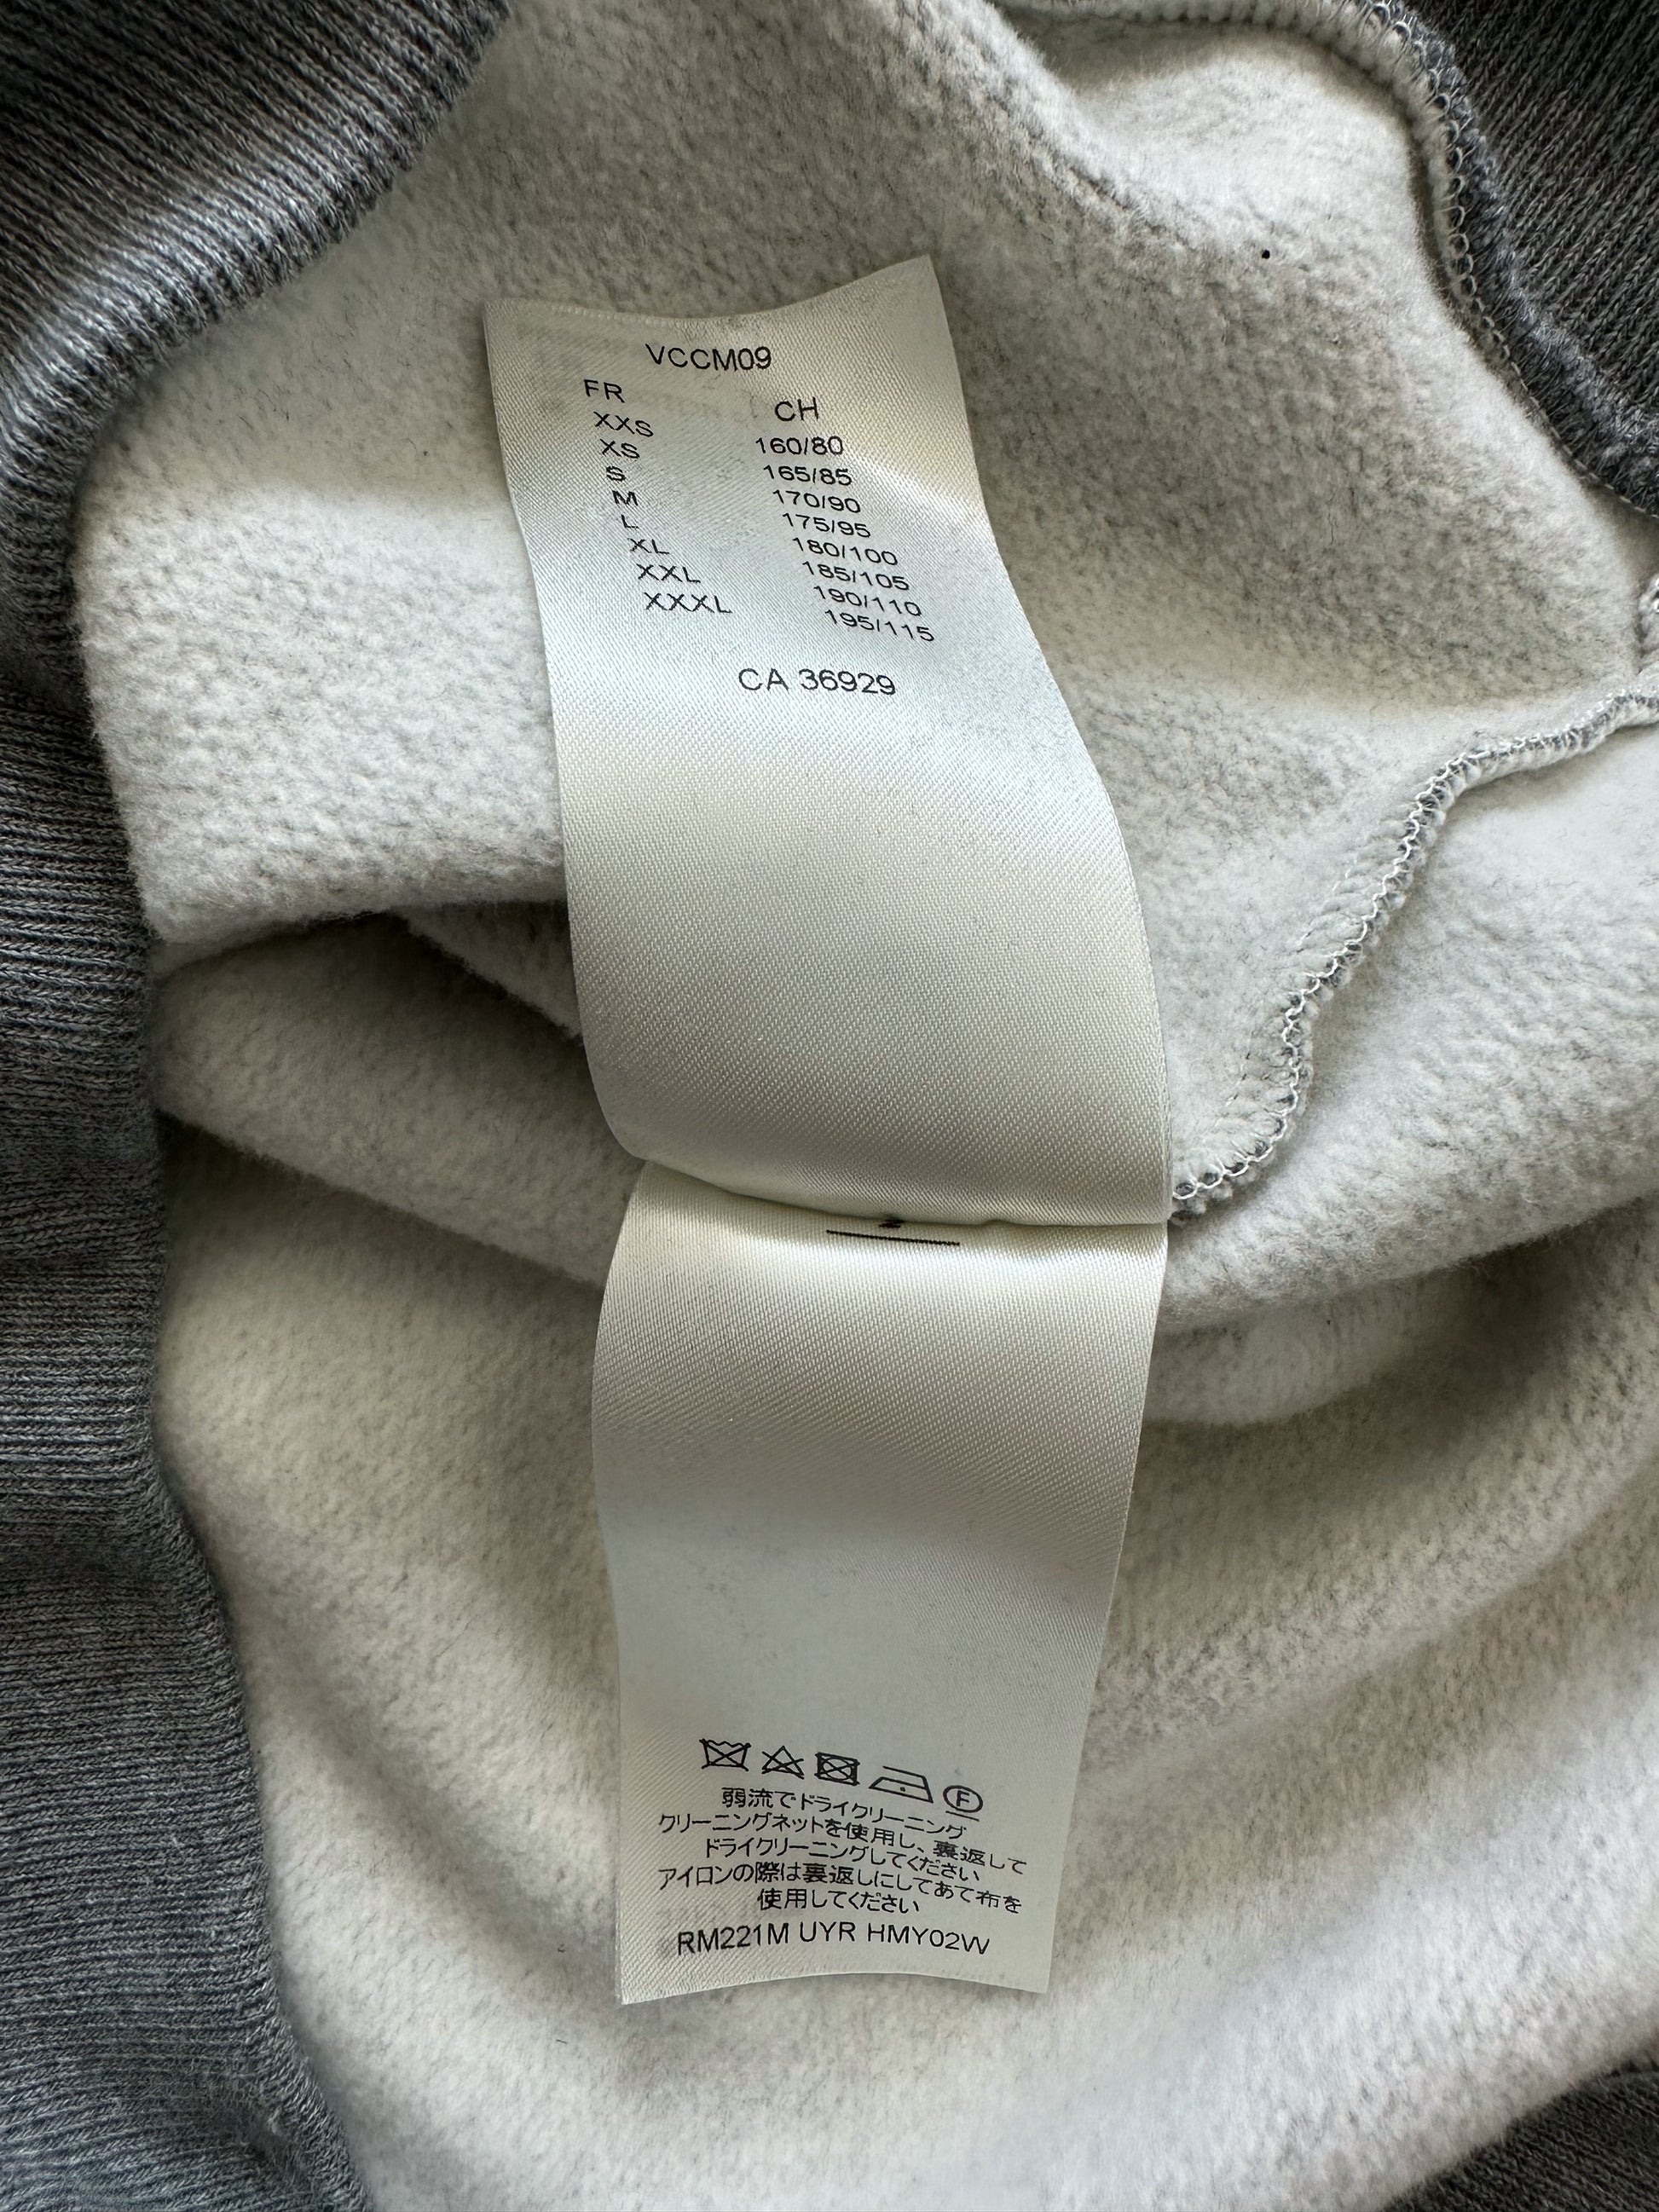 Louis Vuitton x Nigo Printed Heart Sweatshirt Light Grey Men's - FW21 - US